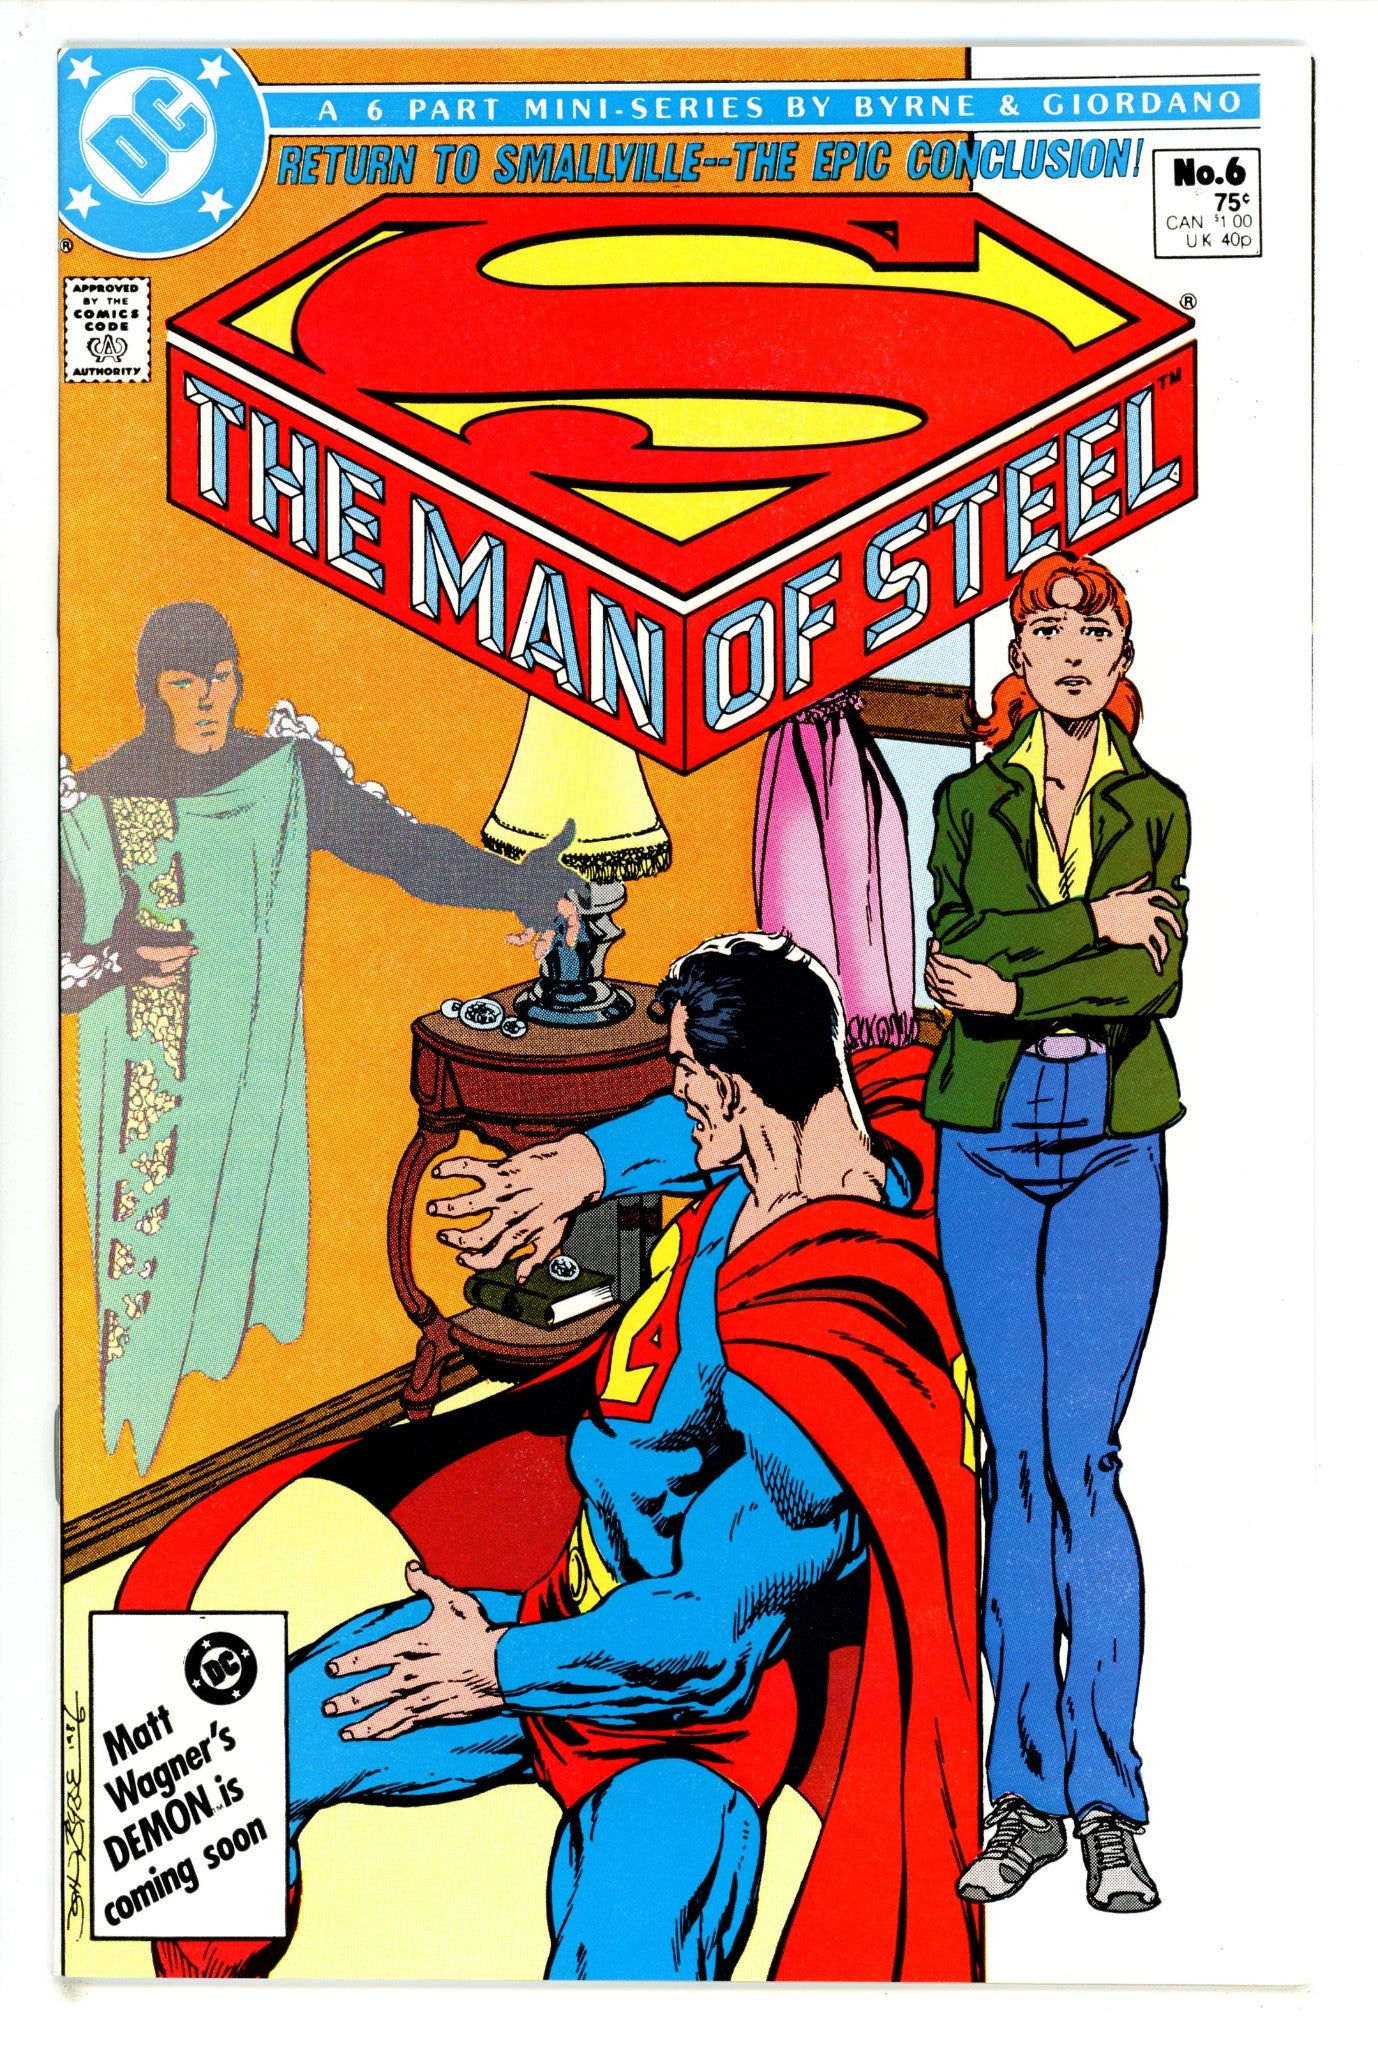 The Man of Steel Vol 1 6 (1986)